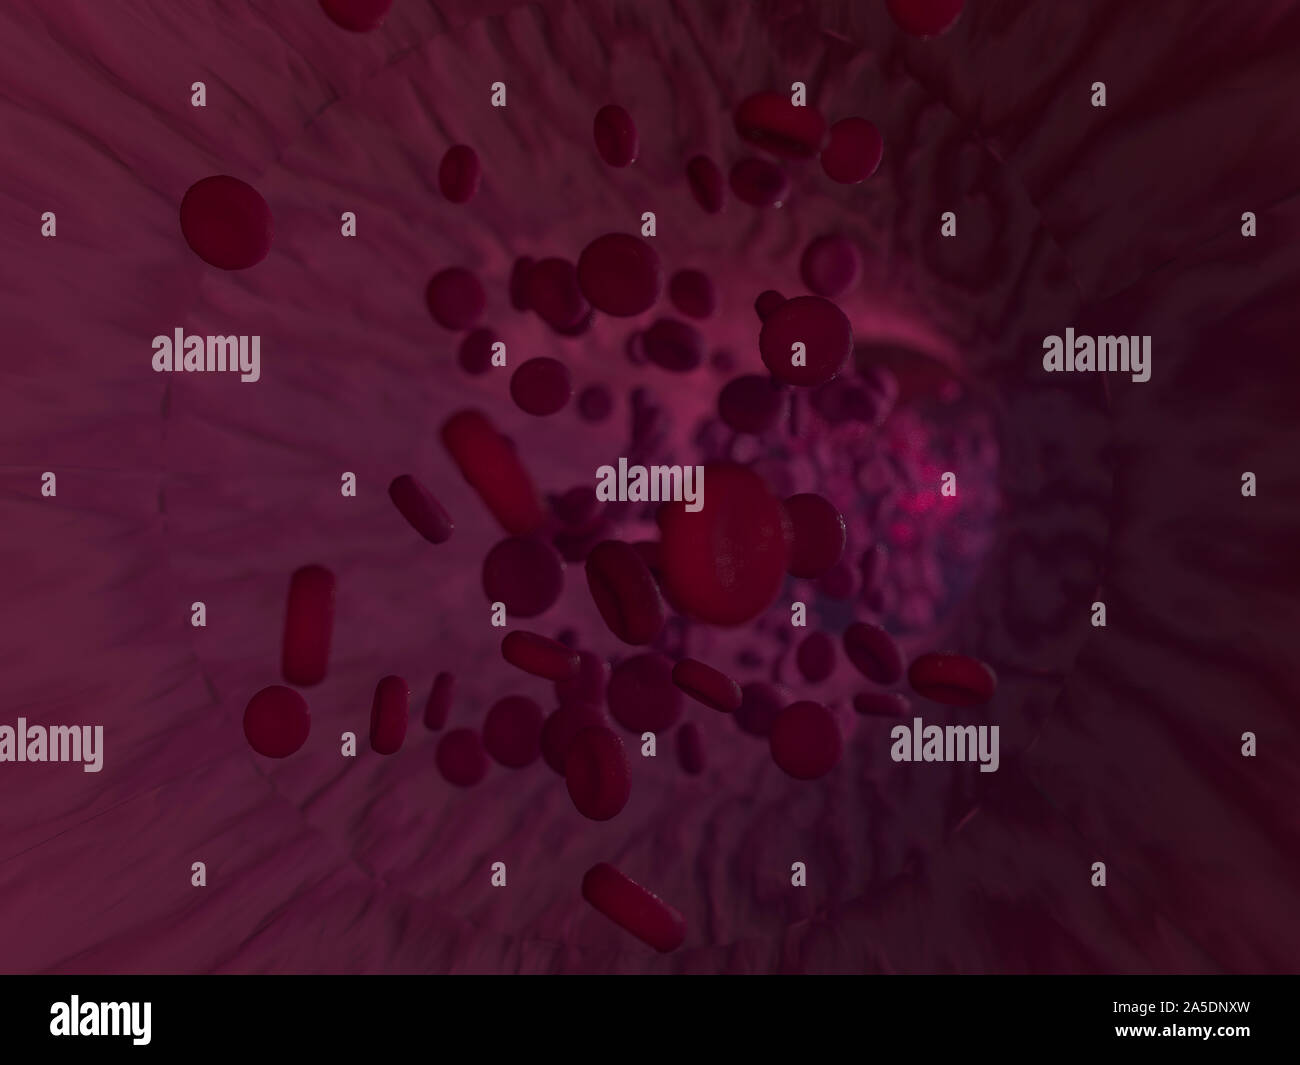 Red blood cells. Scientific illustration bloodstream. 3D rendering Stock Photo